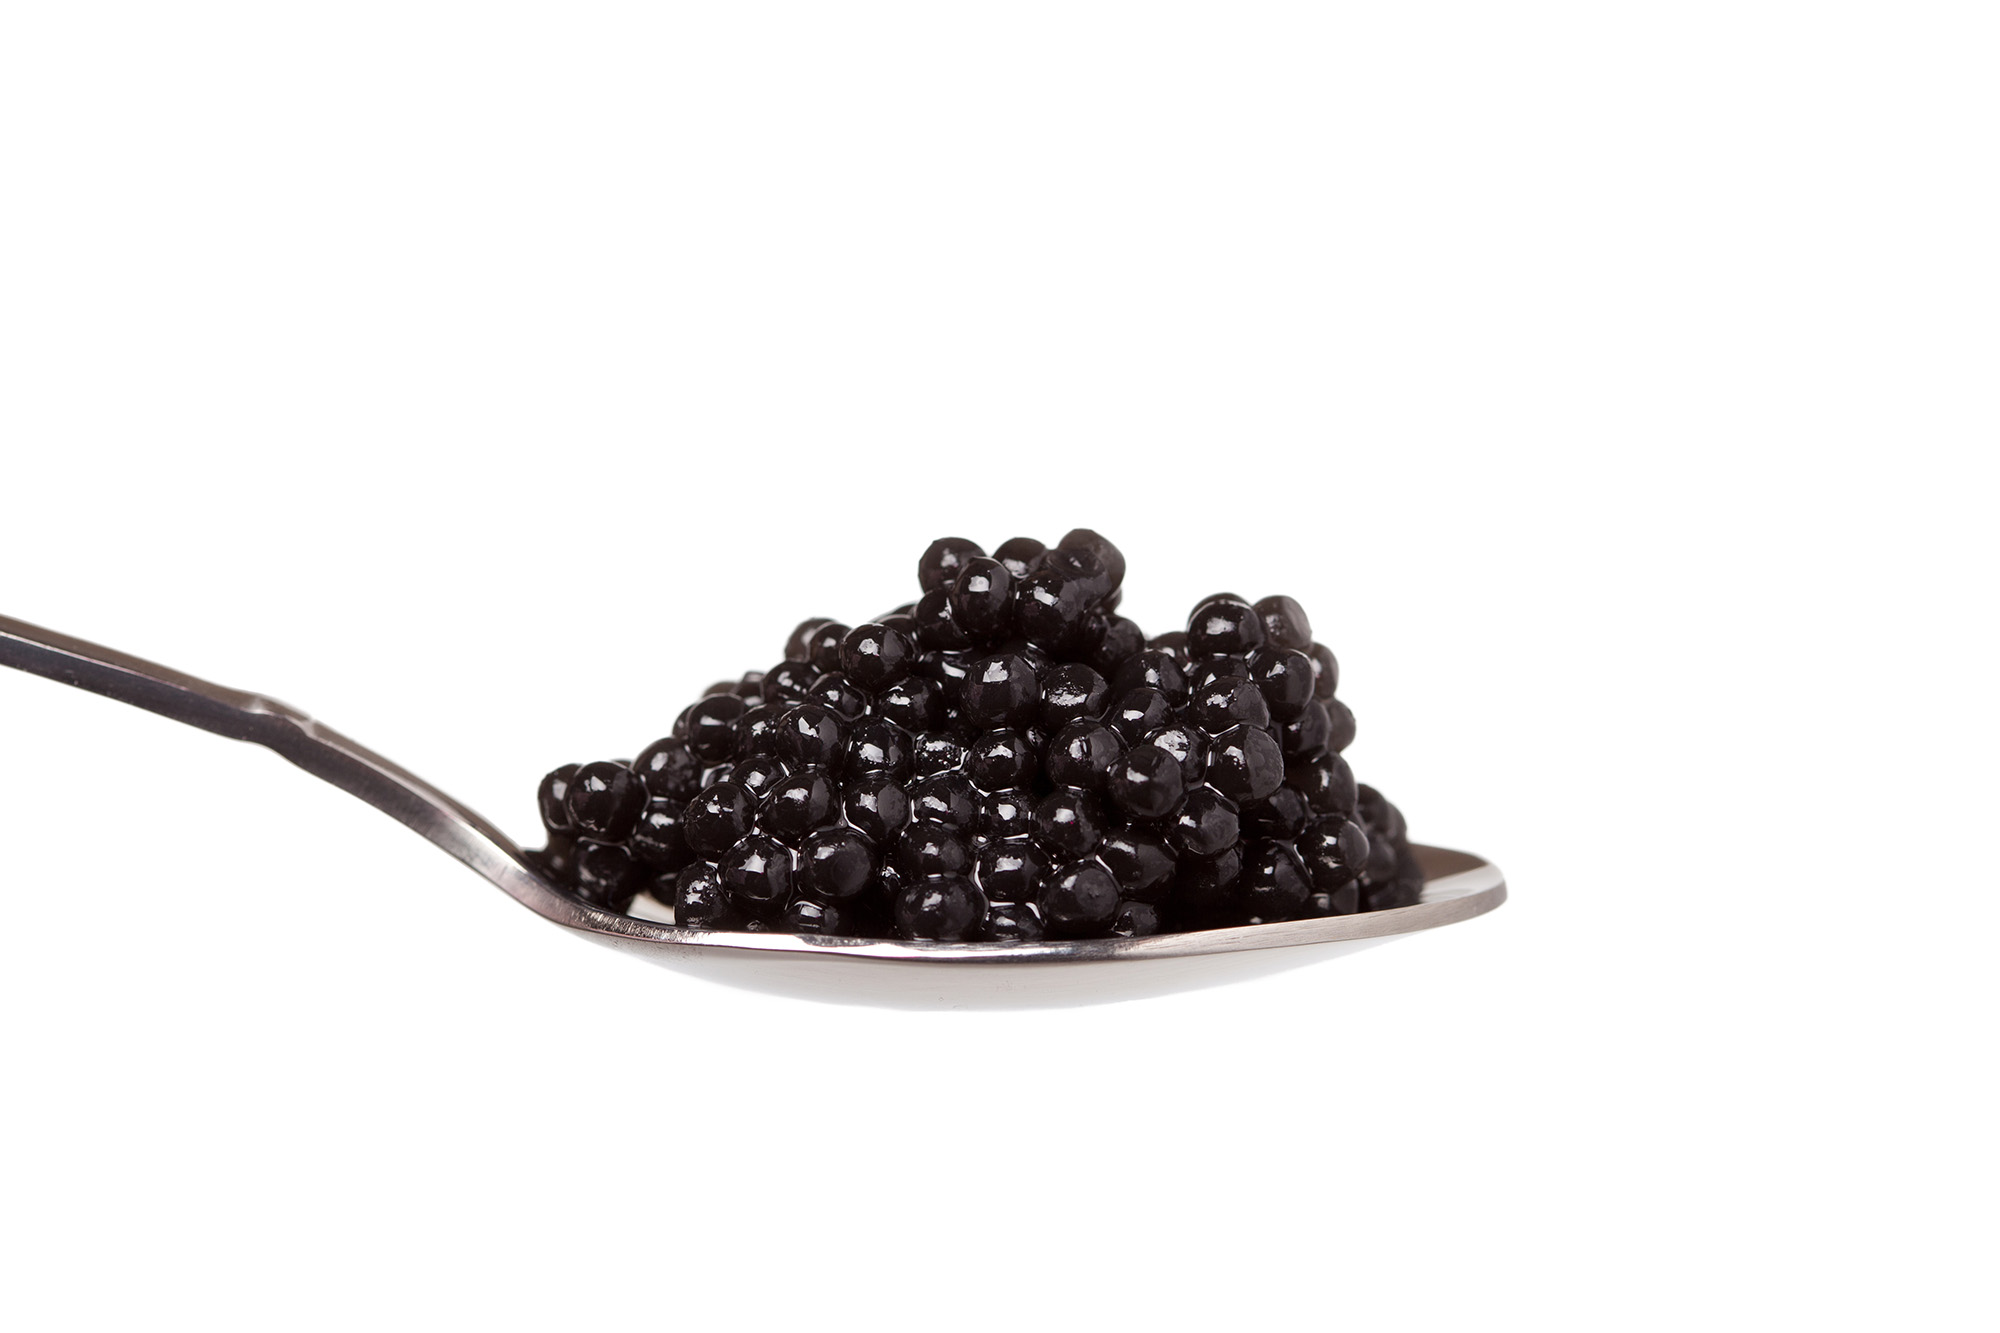 Ranit varicoza caviar. Caviar vânat cu varice